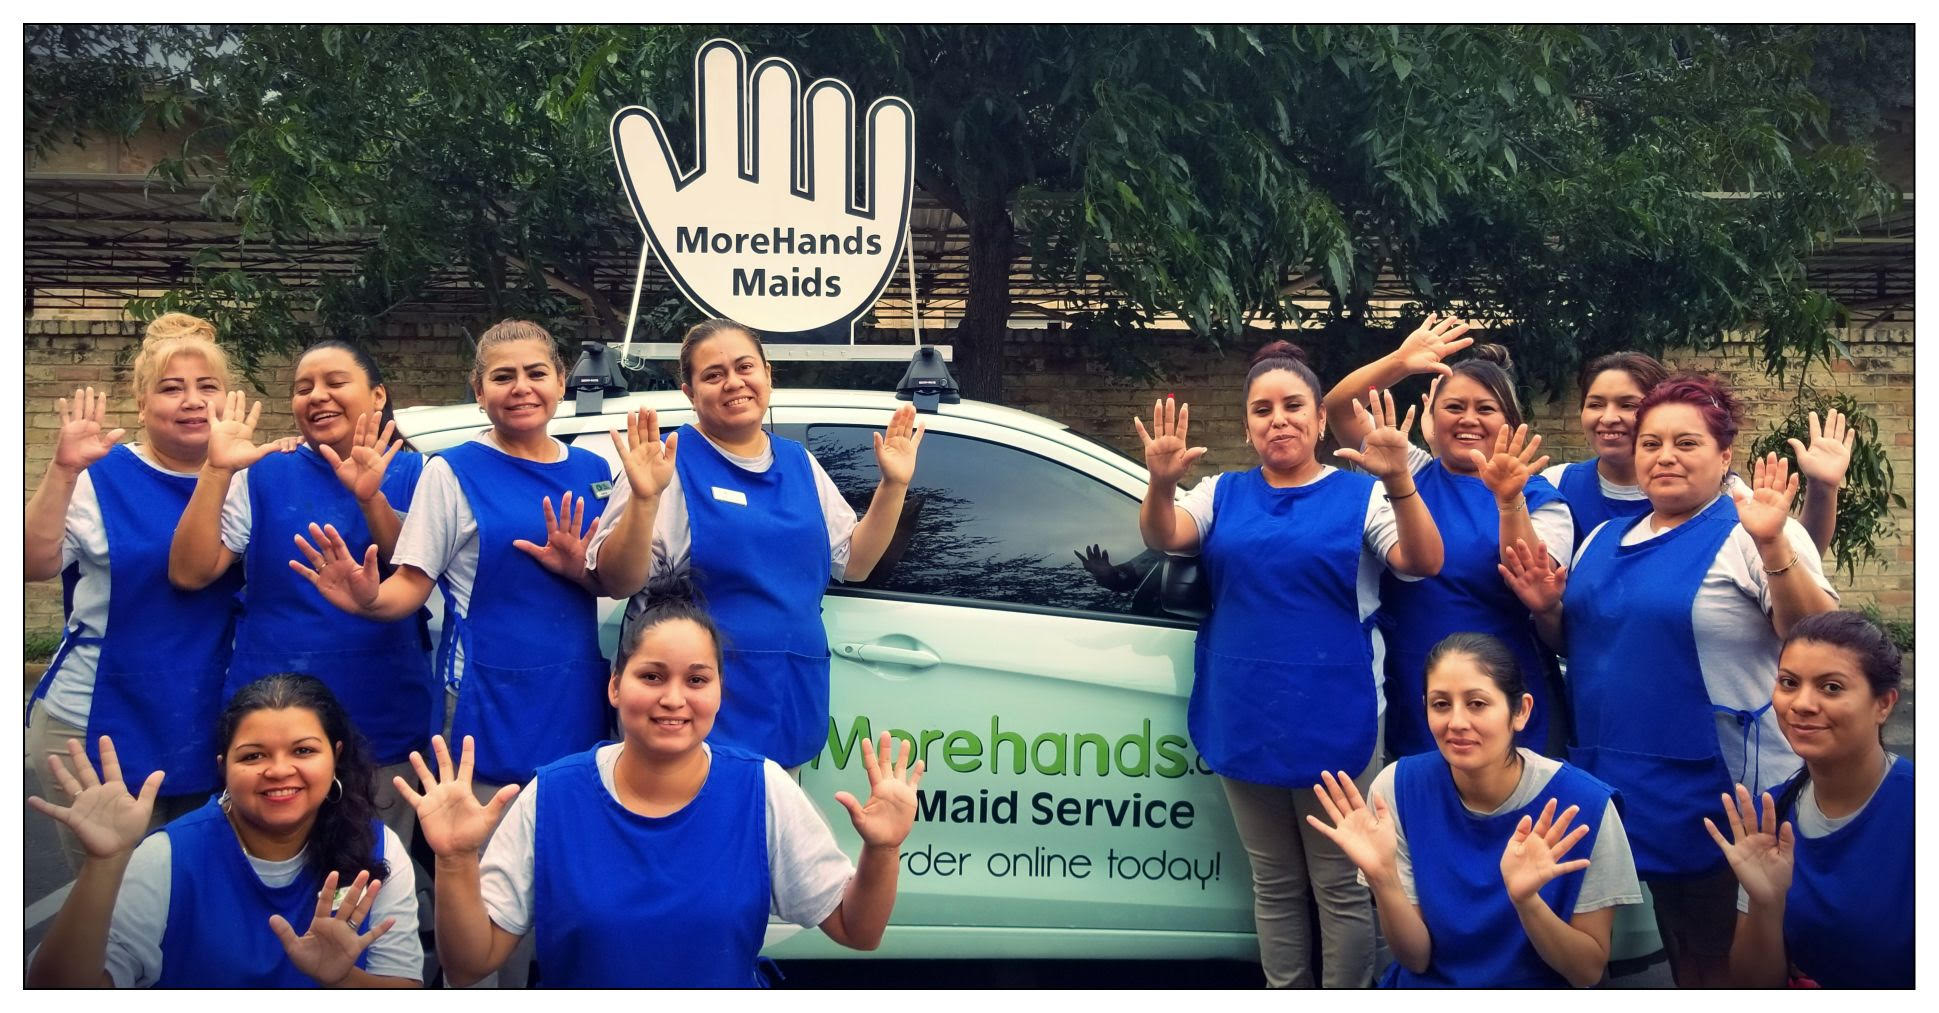 MoreHands Randy De La Cruz, Owner and Operator Managers MoreHands Best Maid Service in Richardson